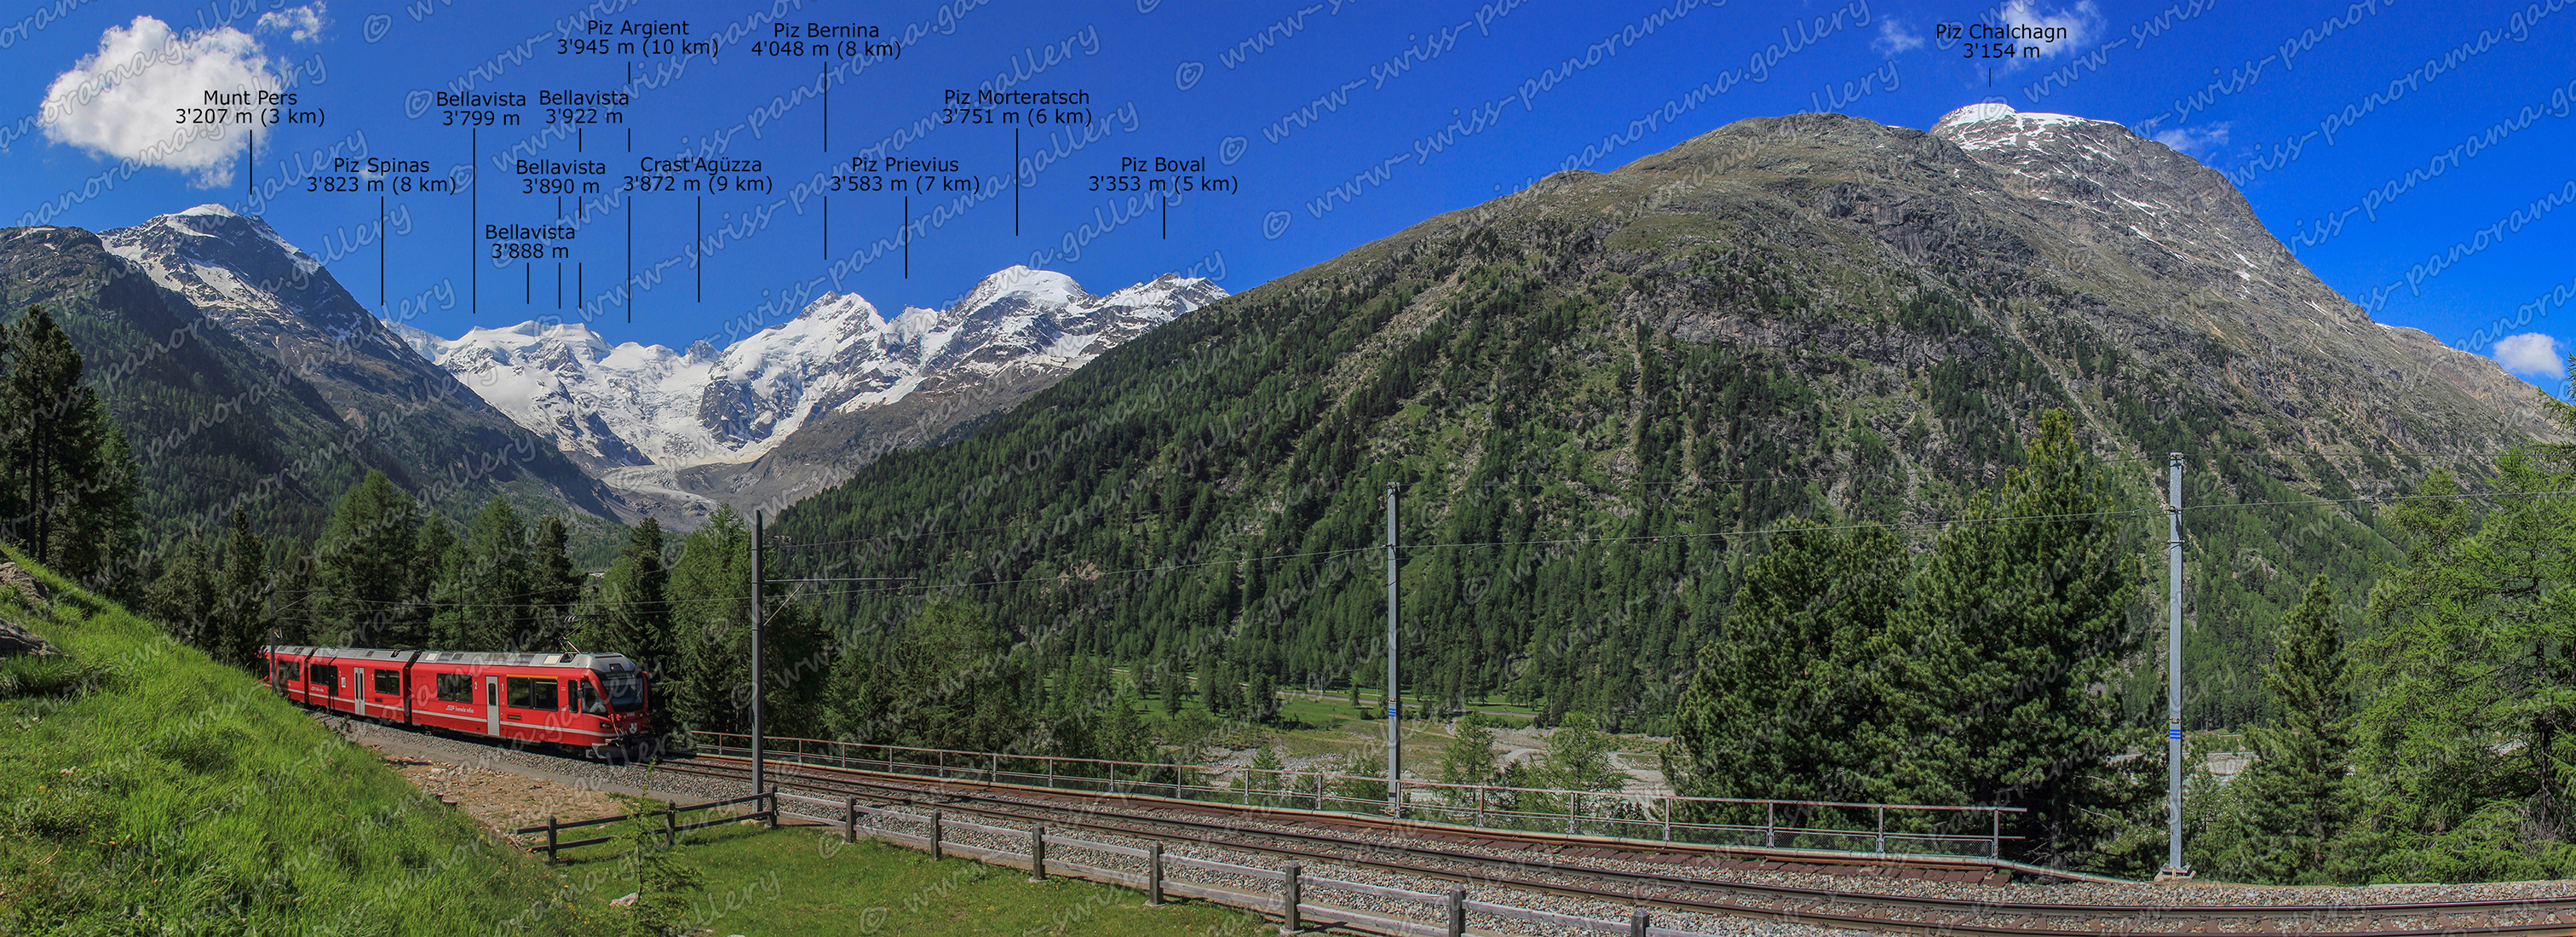 Switzerland Bernina Pass panorama Morteratsch, Munt Pers, Piz Spinas, Bellavista I, Bellavista 3'888 m, Bellavista 3'890 m. Piz Argient 3'945 m (10 km), Crast'Agüzza, Chalchagn
Piz Boval 3'353 m (5 km), Piz Morteratsch 3'751 m (6 km),Piz Prievius 3'583 m (7 km), Piz Bernina
